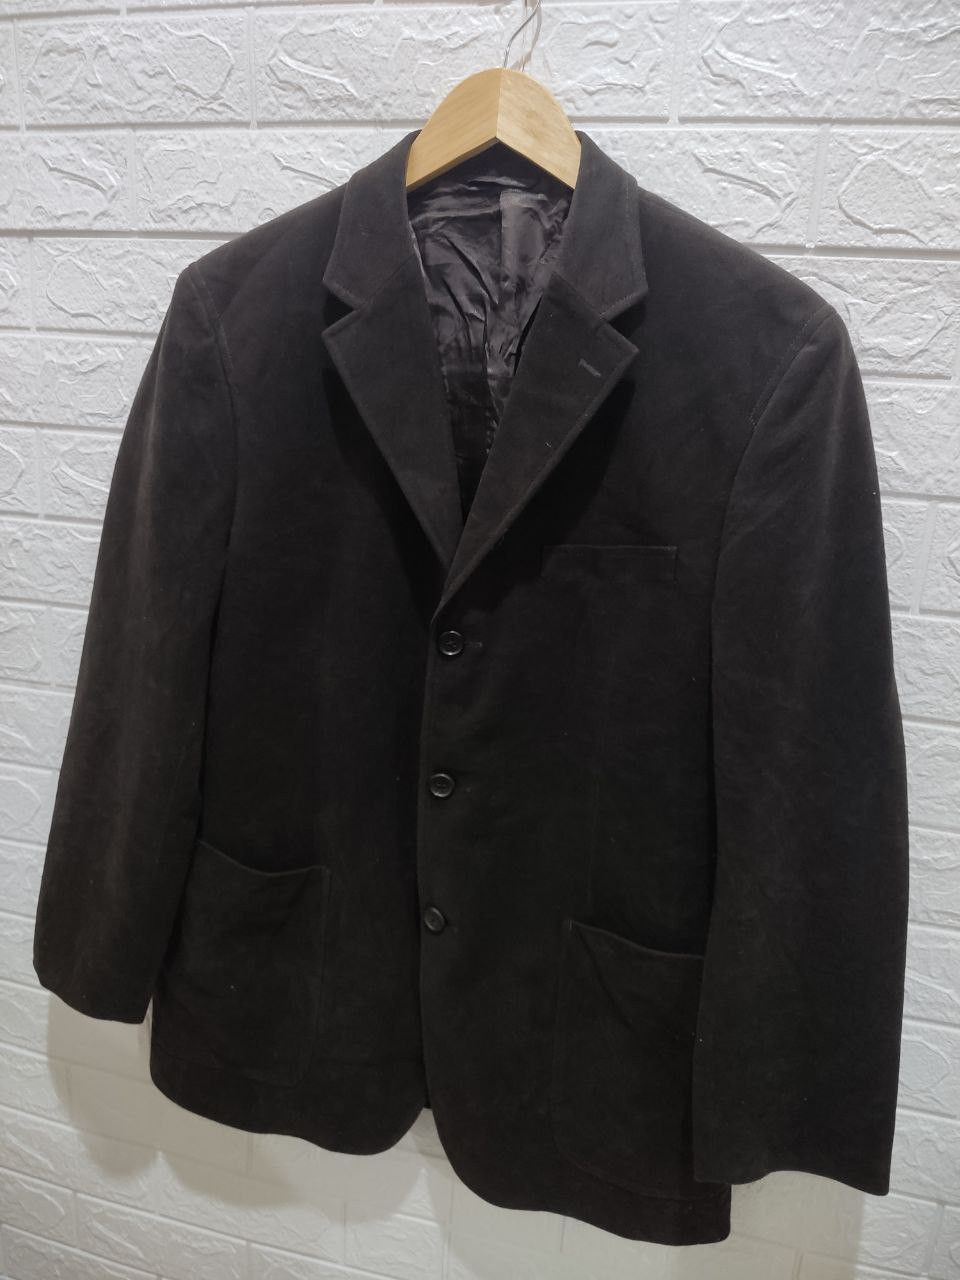 D'Urban Taylor Casual Japanese Designer Blazer Suit Jacket - 4